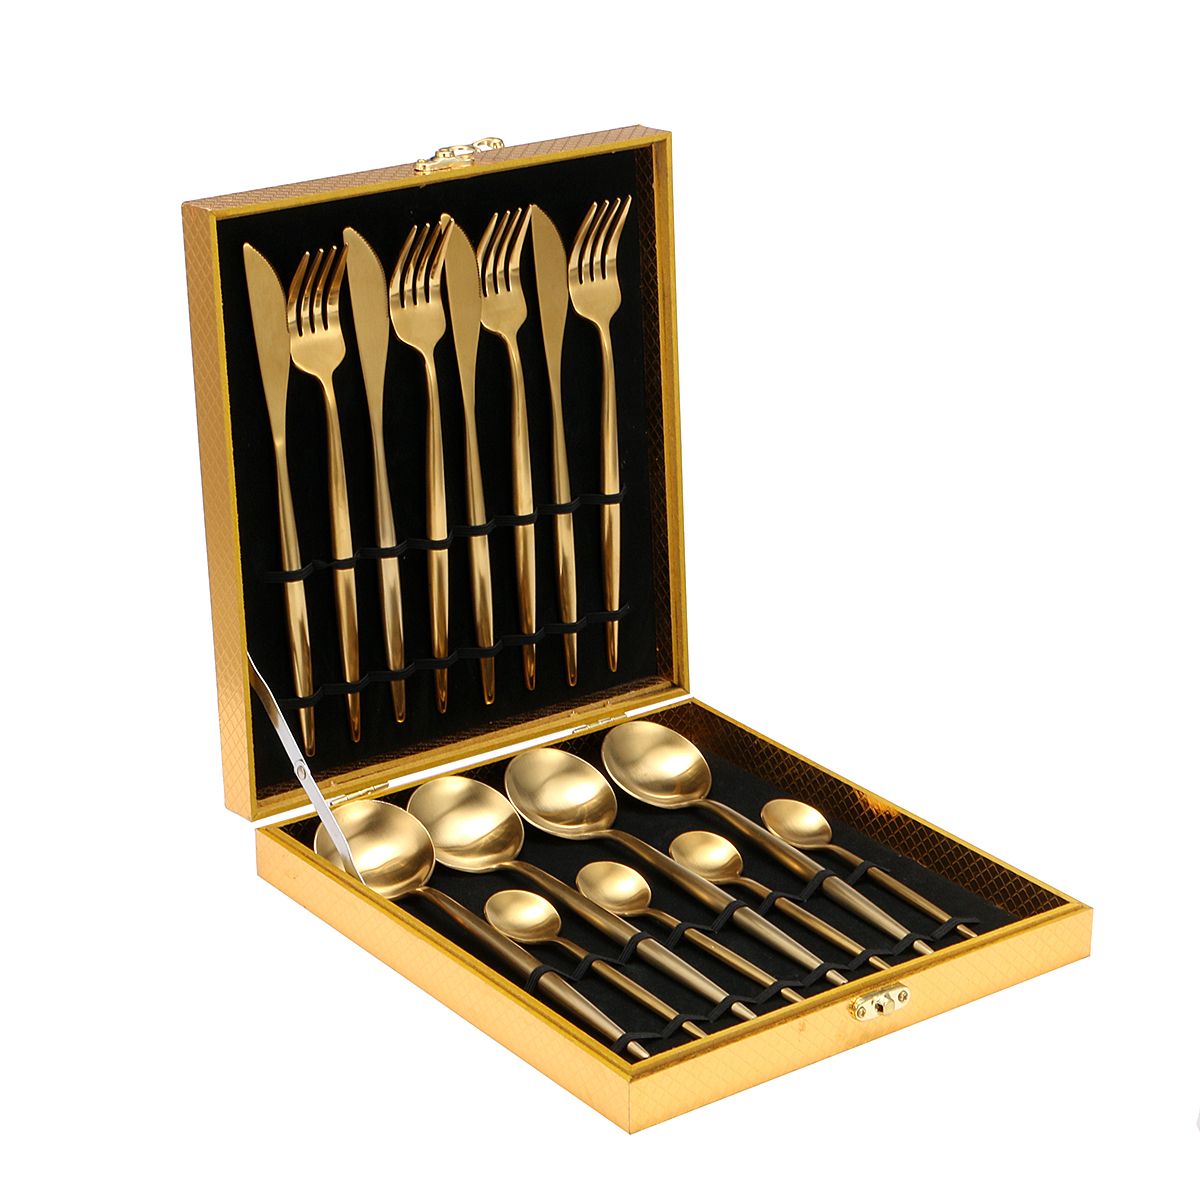 16Pcs-Gold-Dinnerware-Fork-Cutter-Tea-Spoon-Stainless-Steel-Tableware-Cutlery-Set-1340726